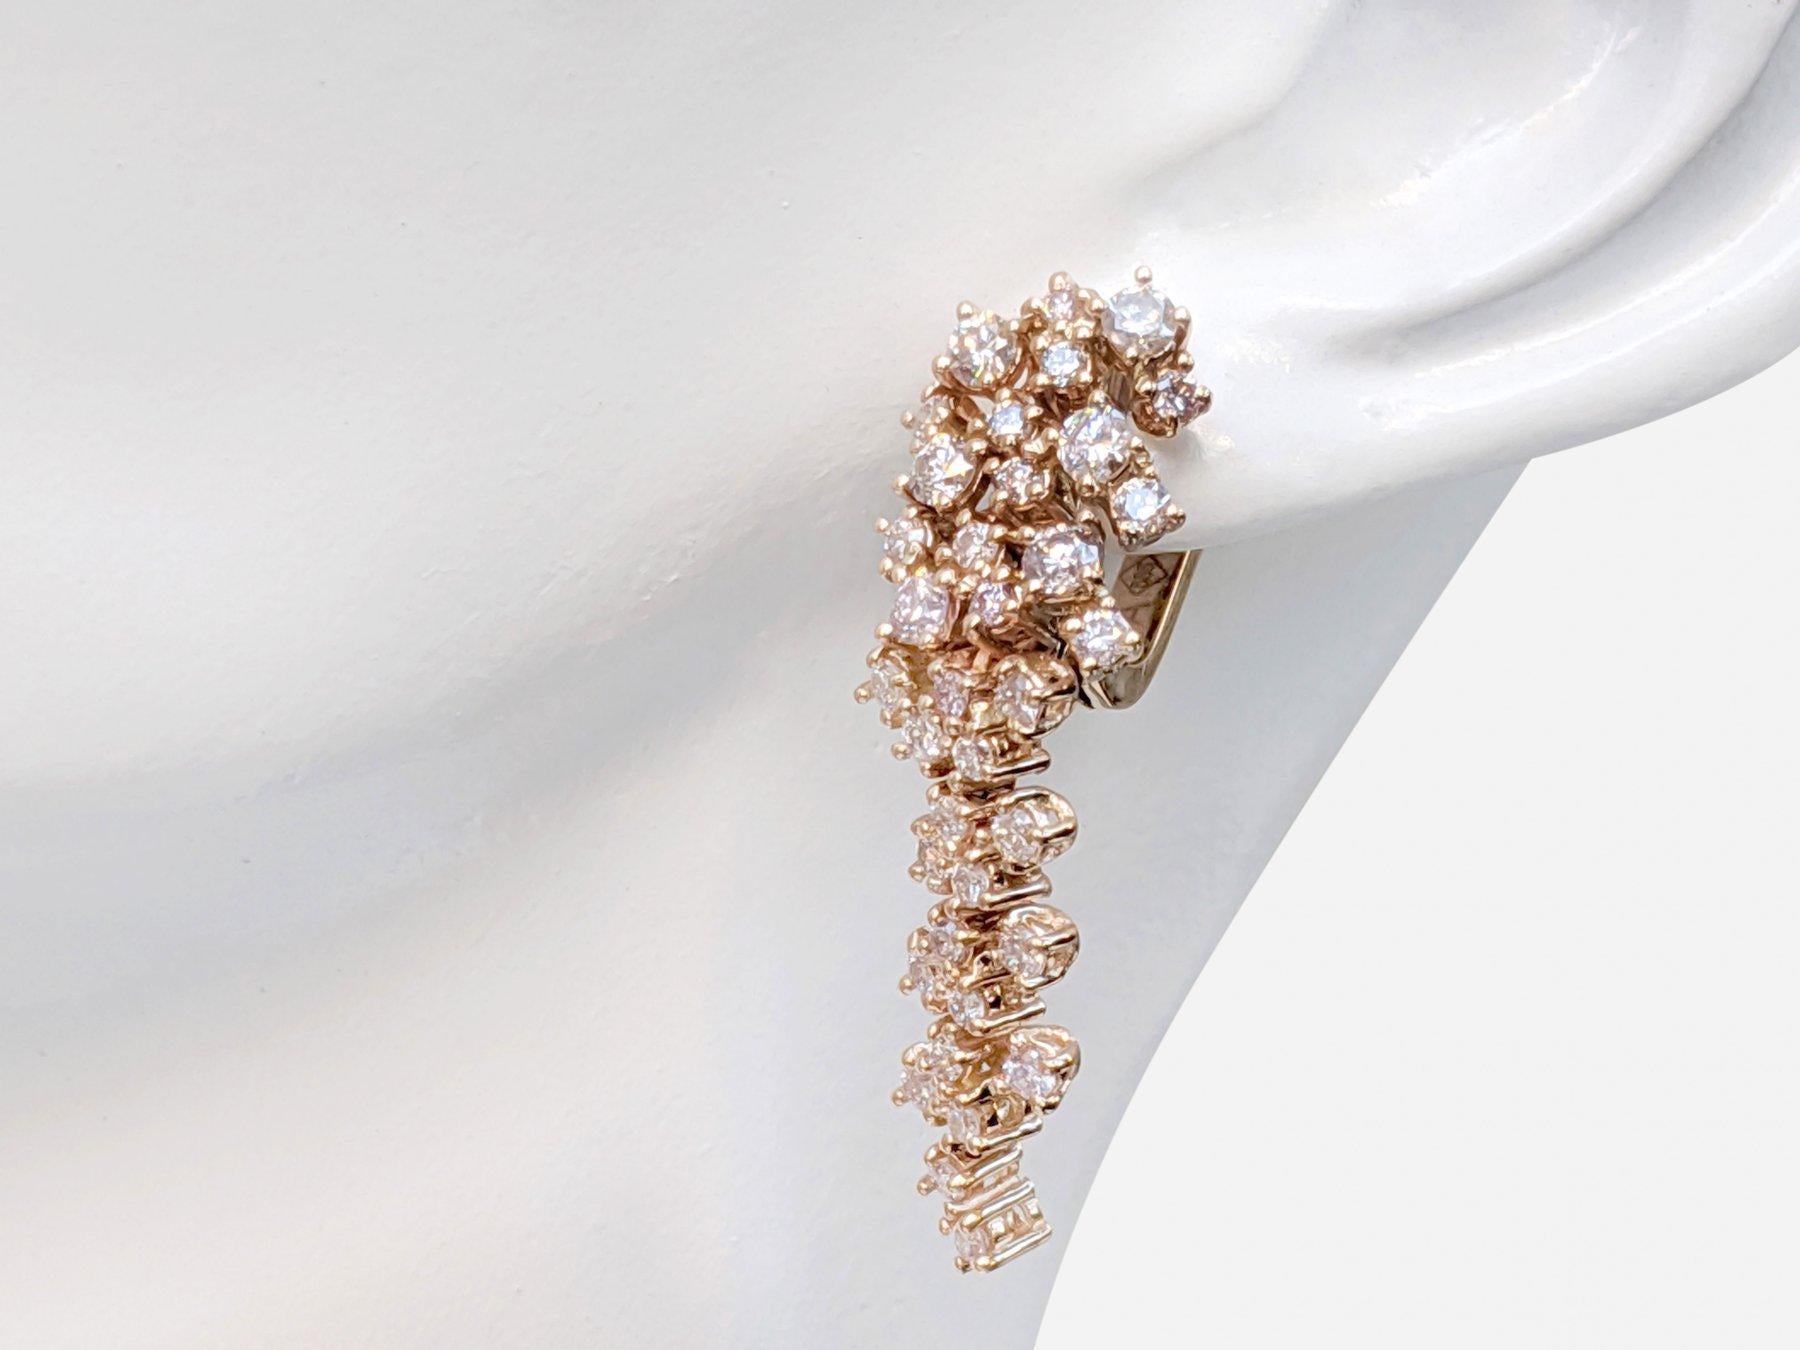 TAILLE ! NOTRE RESERVATION ! 1,50 carattw Diamants roses fantaisie - 14 carats. Or rose - Boucles d'oreilles 3